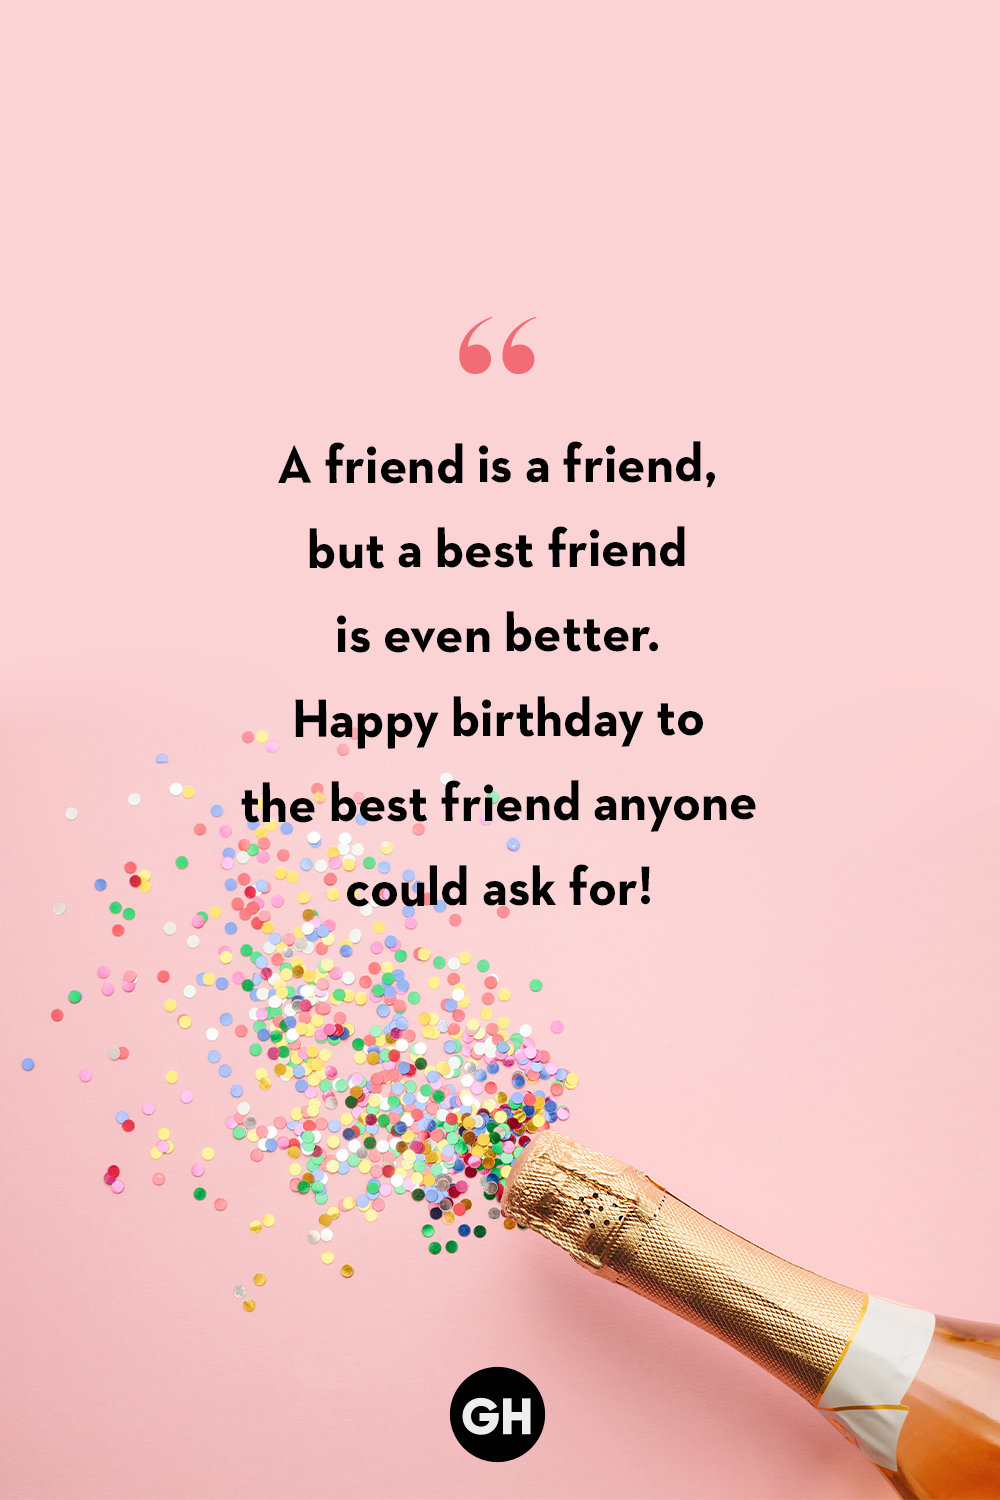 Birthday of a best friend